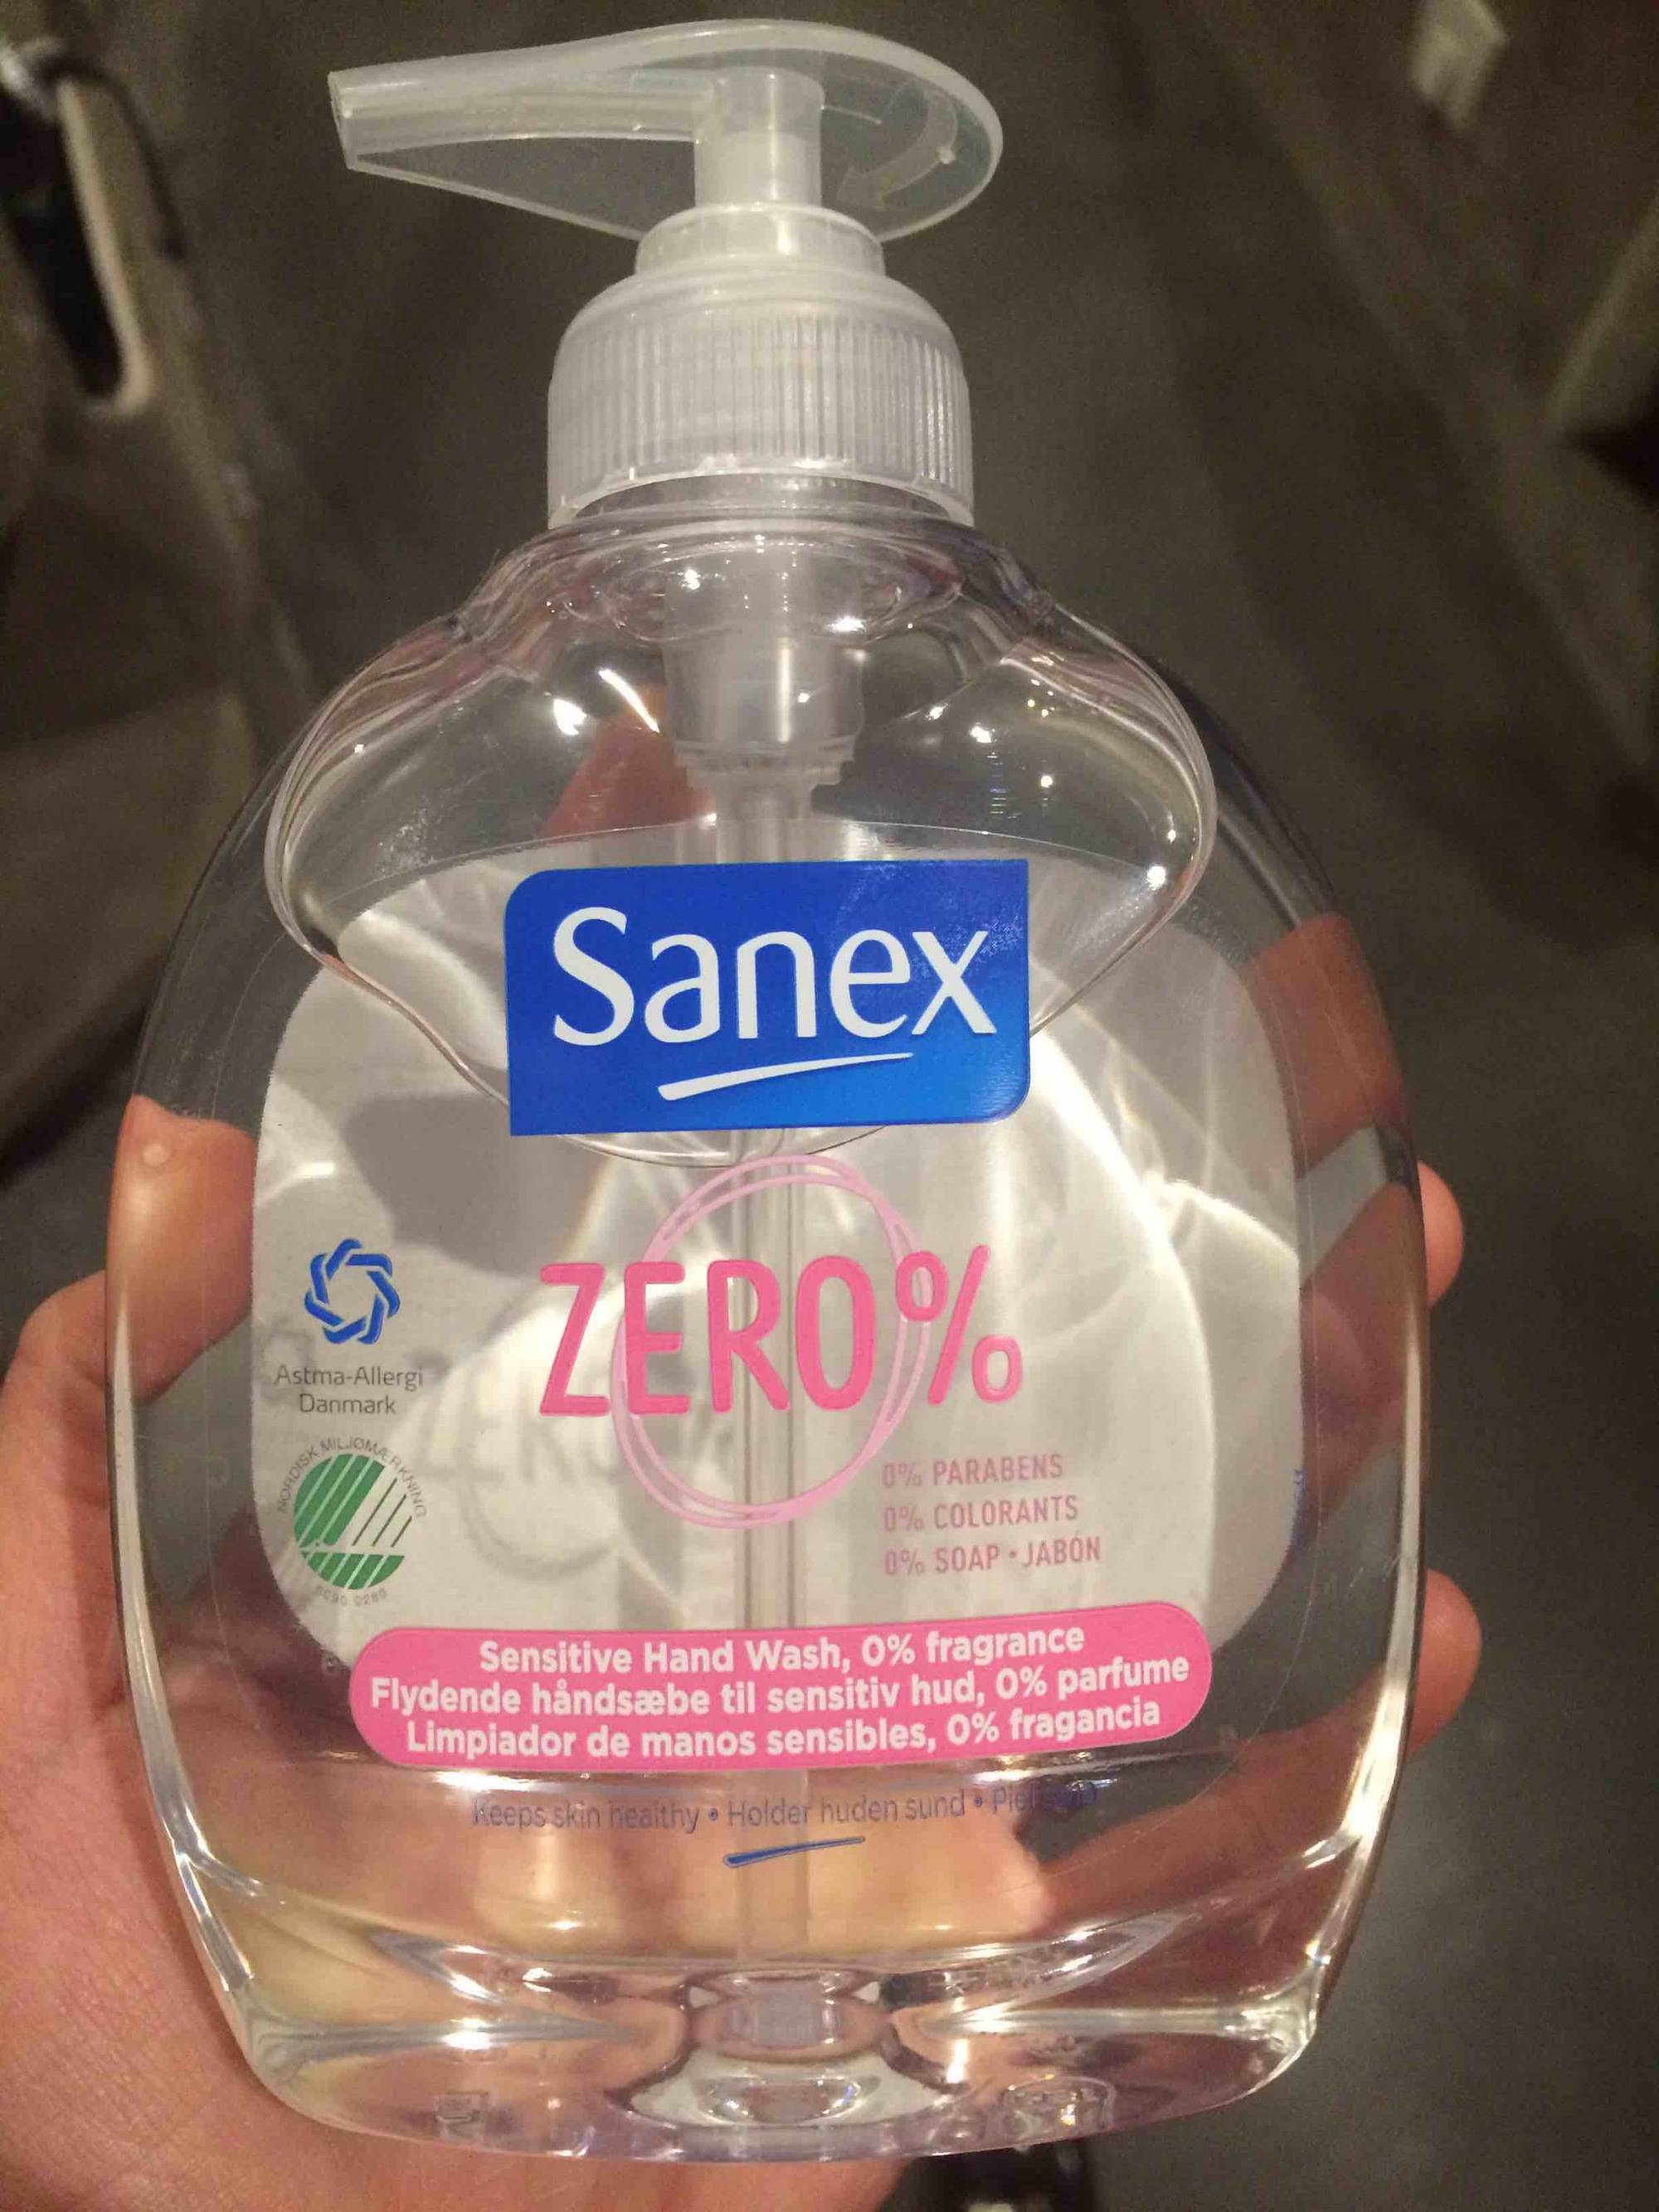 SANEX - Zero %, Sensitive Hand wash